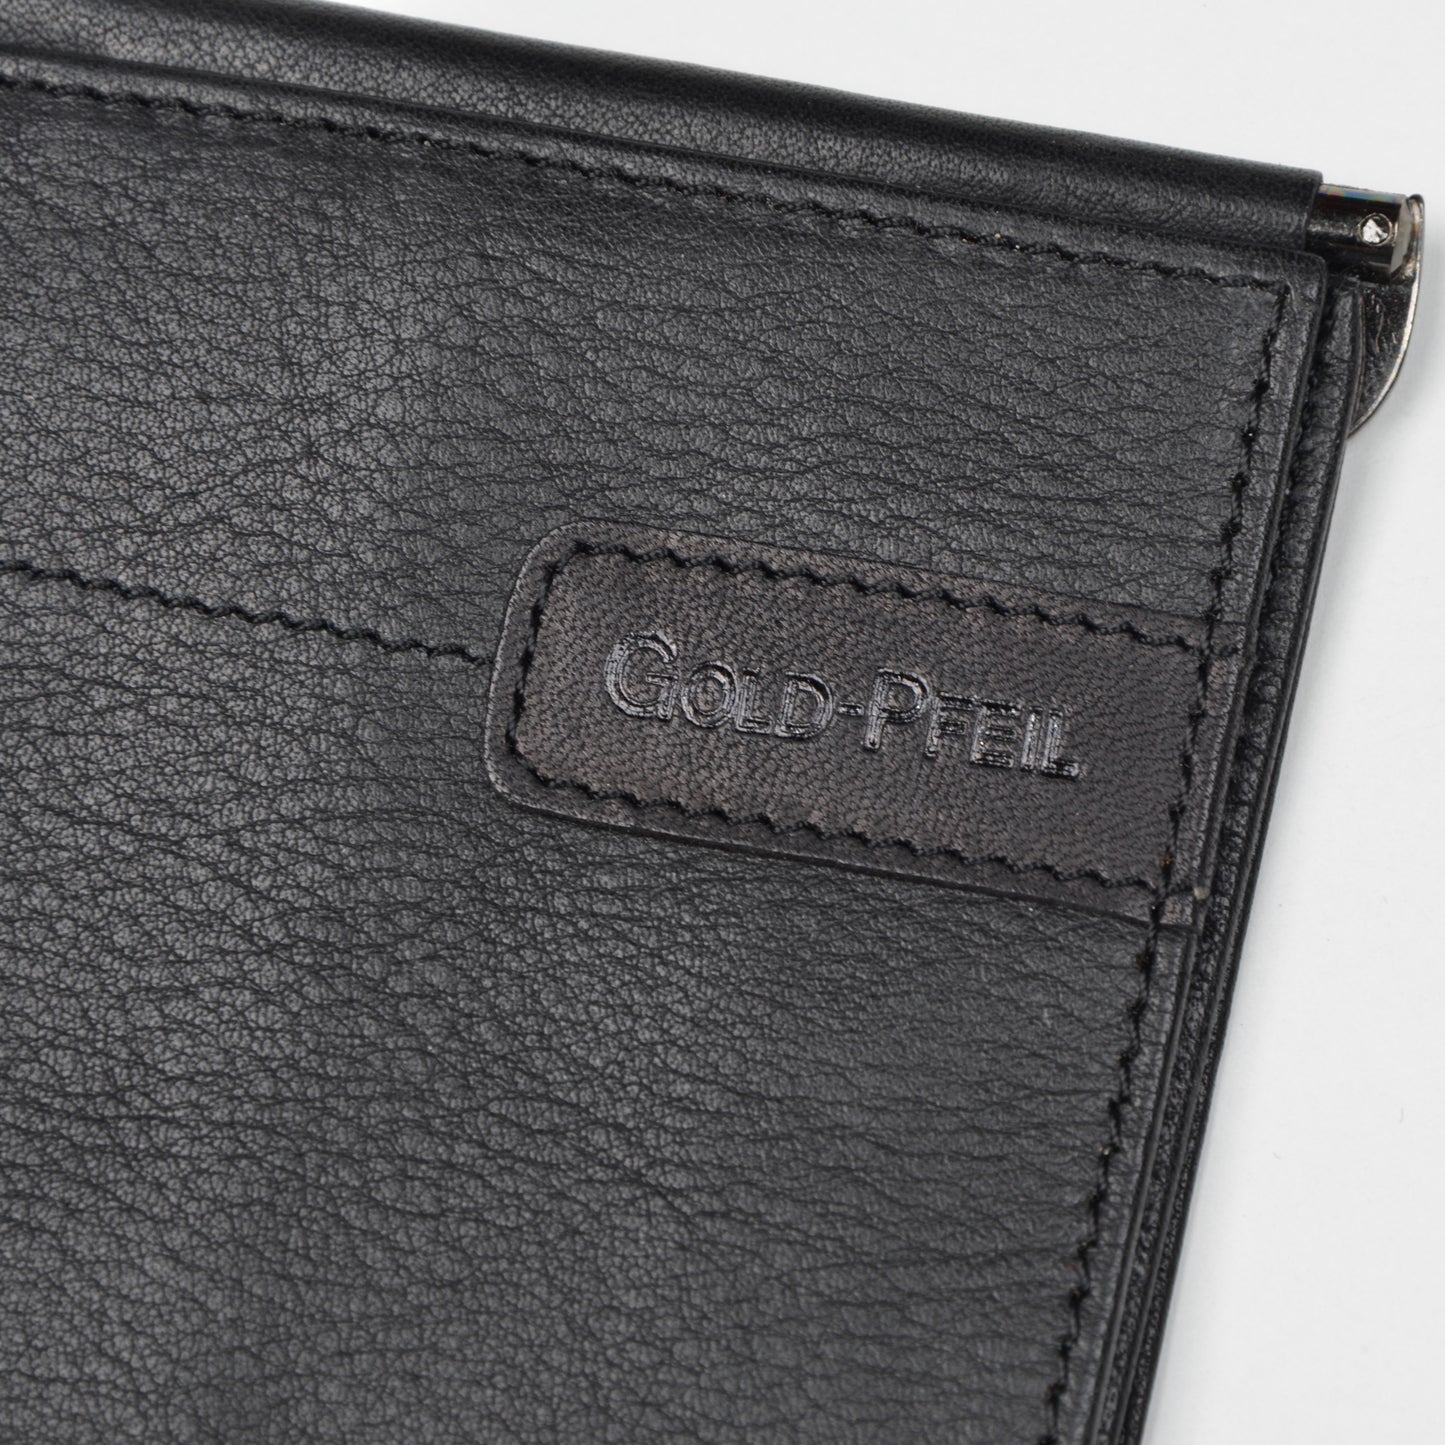 Goldpfeil Double-Sided Leather Wallet & Money Clip - Black